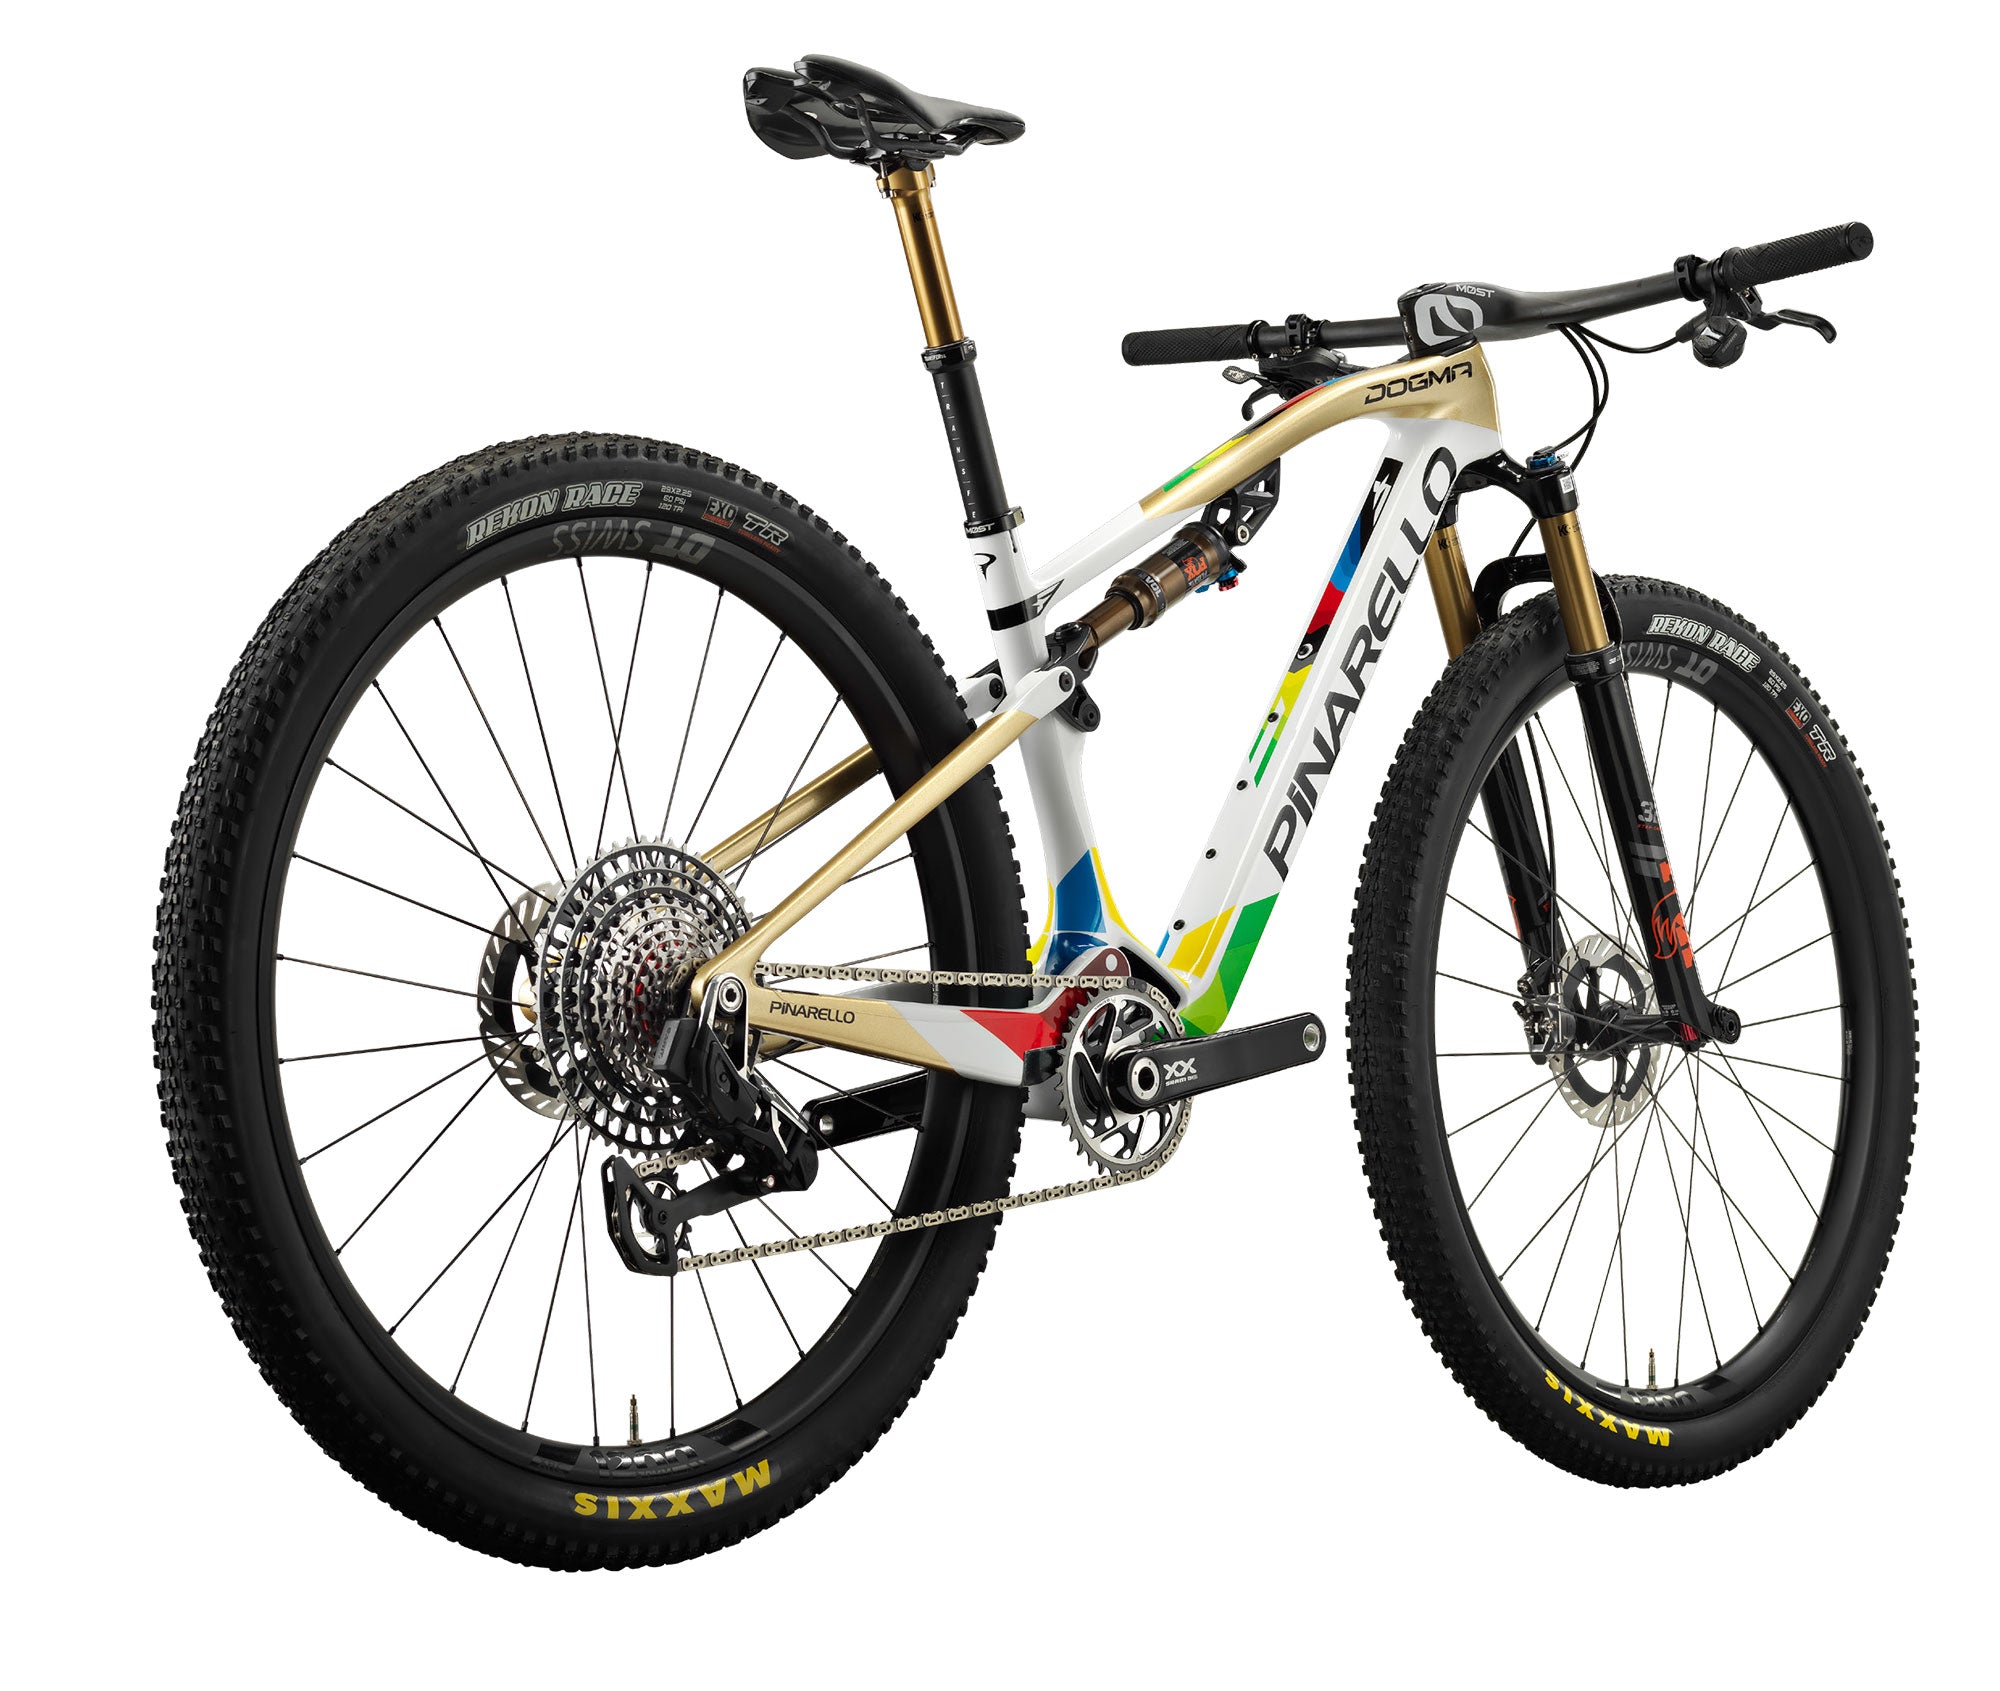 Pinarello Dogma XC pure gold - Premium Bikeshop